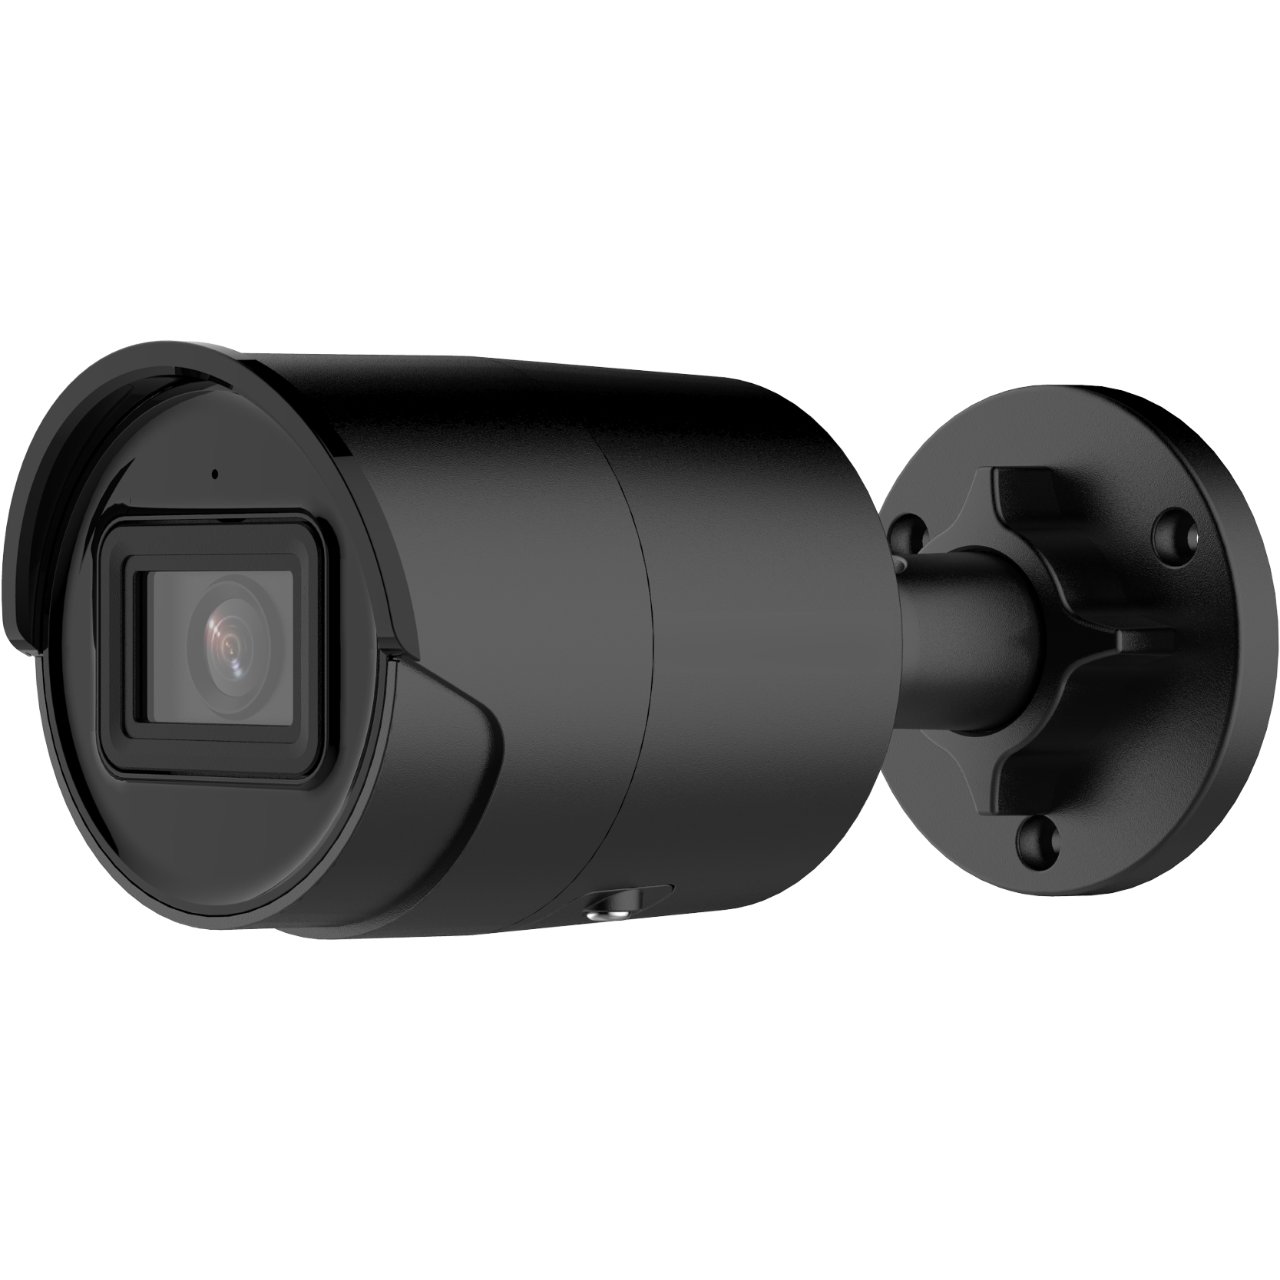 DS-2CD2046G2-I 高解像度ミニバレット型 4MP 2.8mm単焦点レンズ 超低照度 IR照射 防水・防塵 AcuSens搭載 スマートIPカメラ